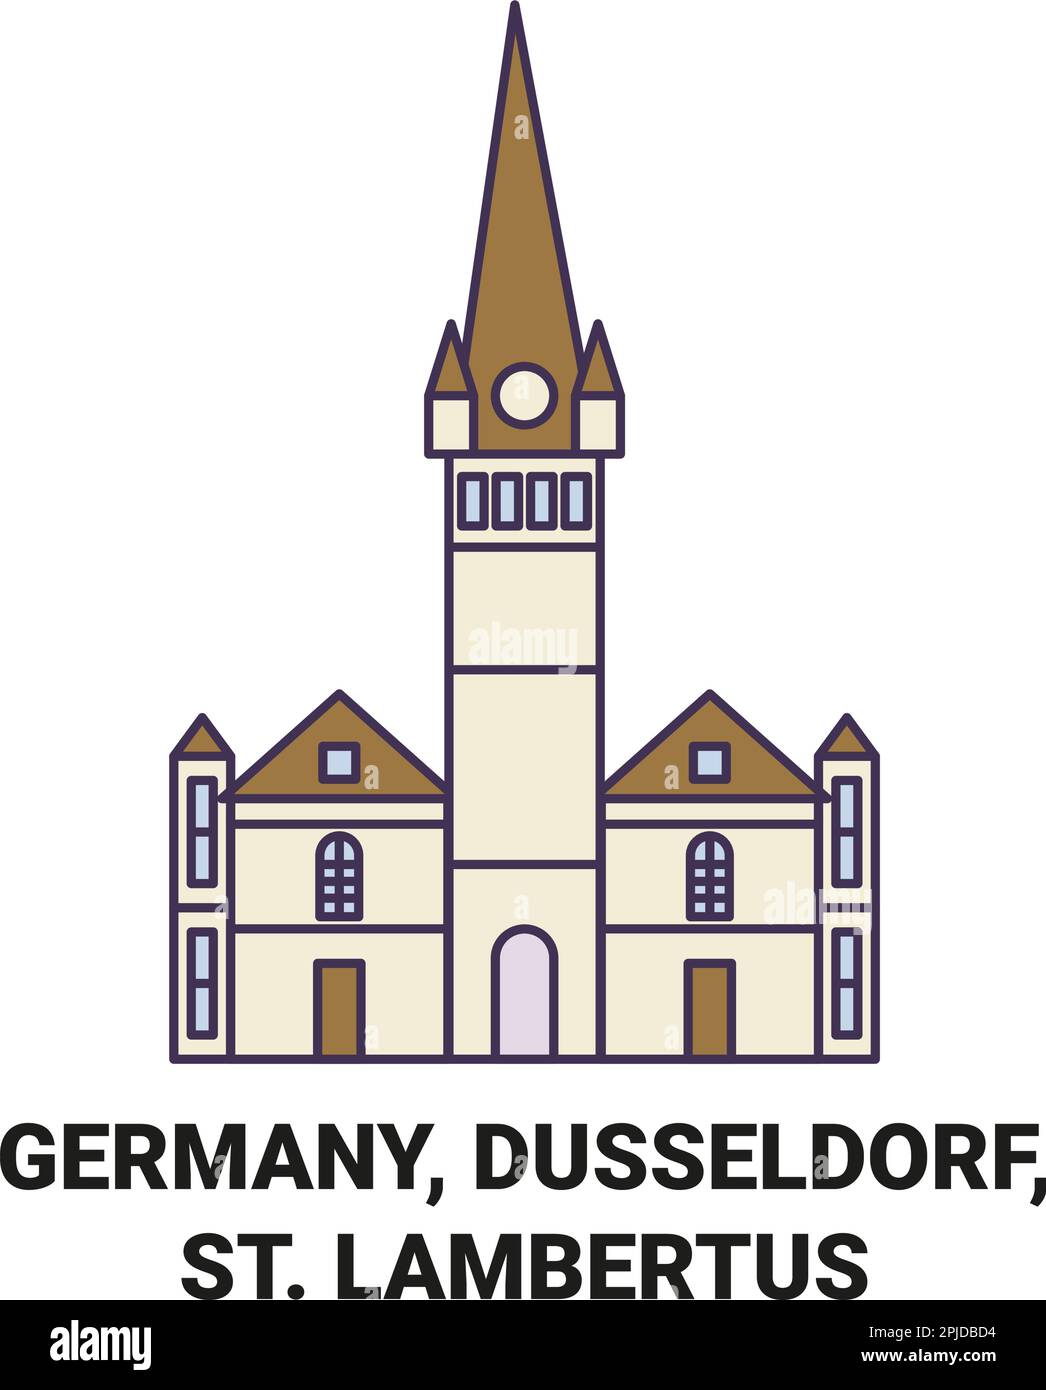 Germany, Dusseldorf,St. Lambertus travel landmark vector illustration Stock Vector